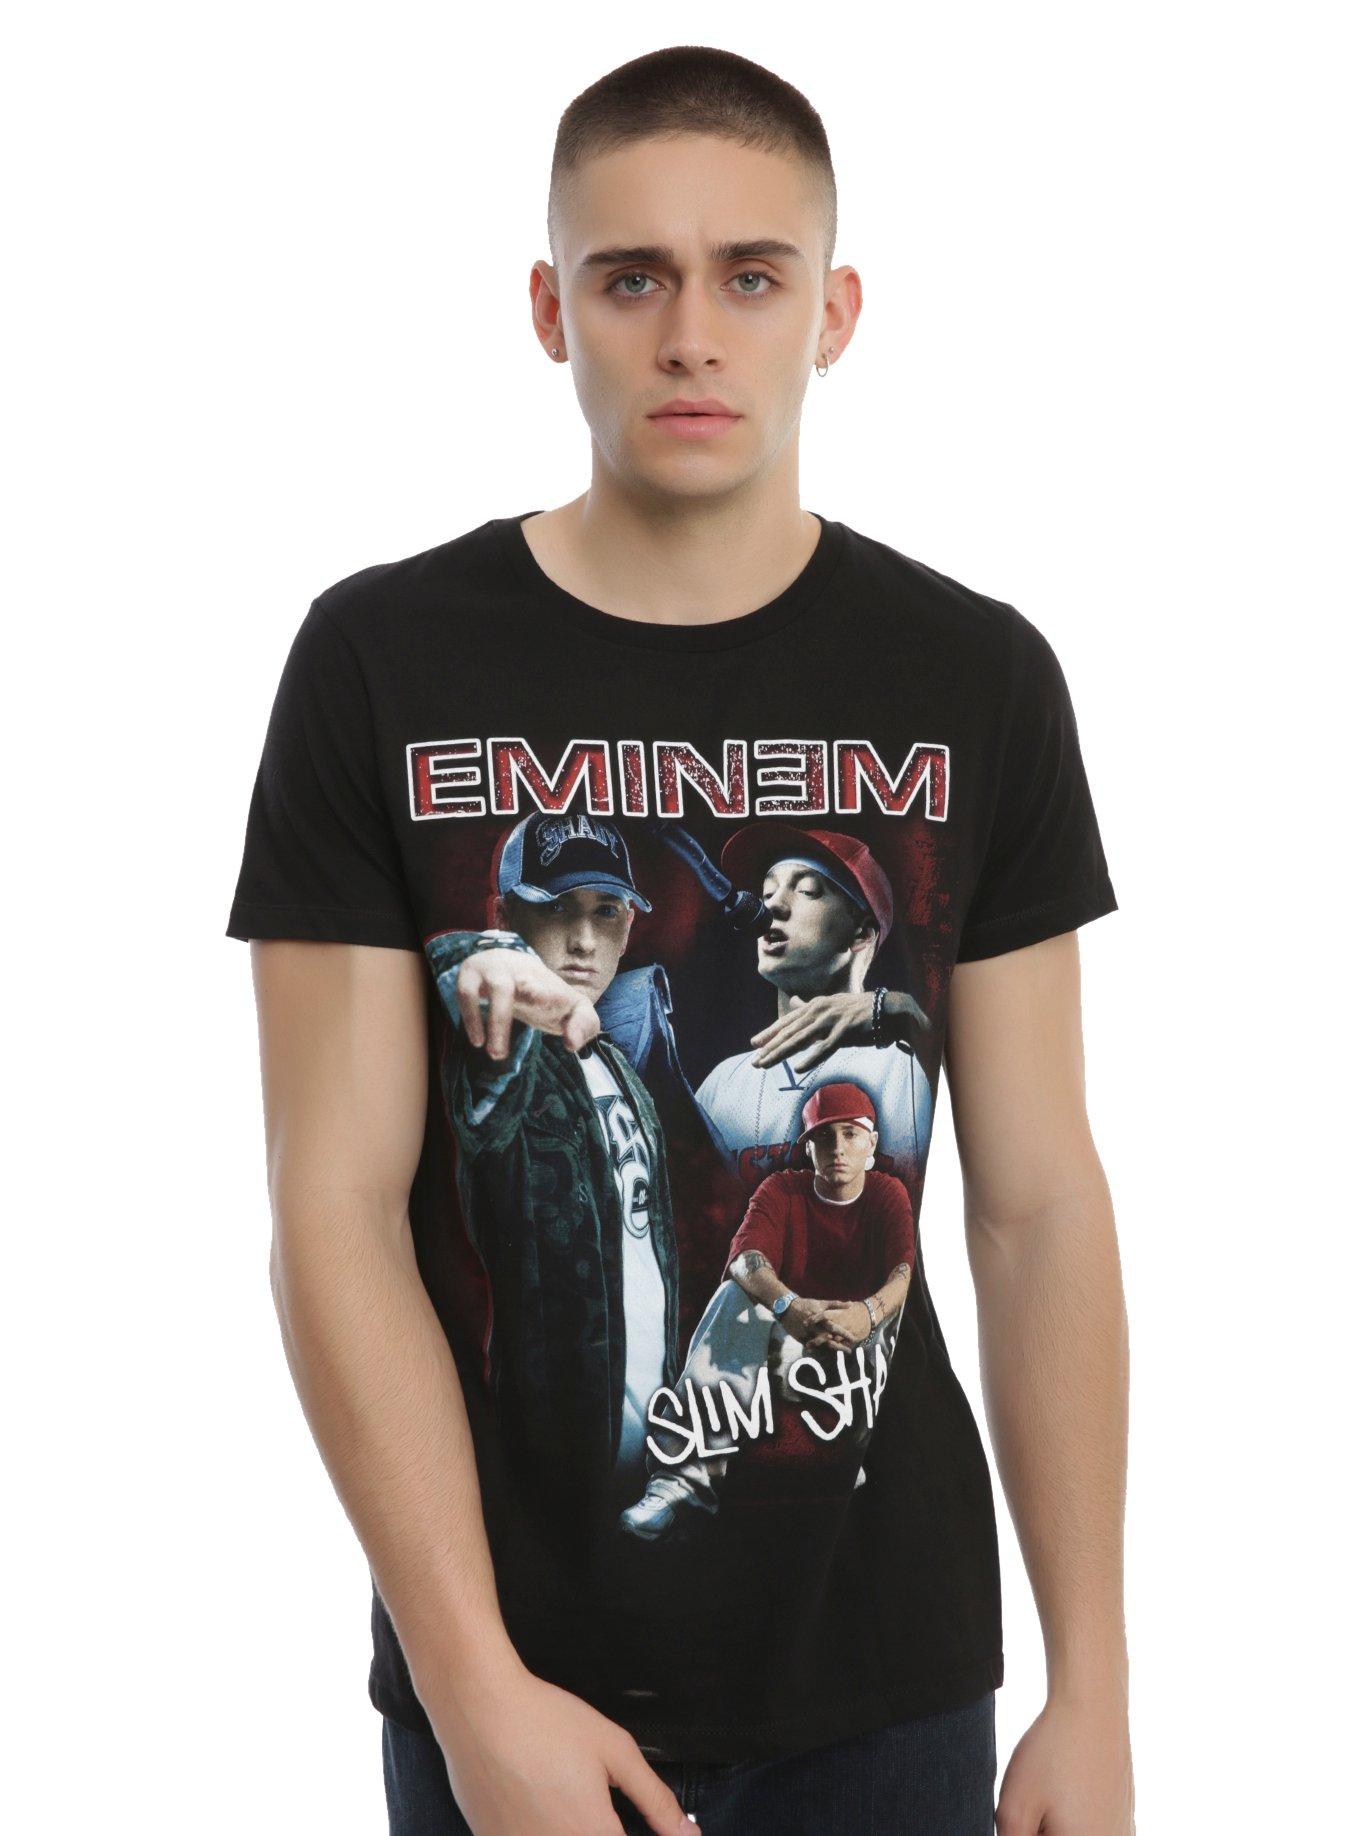 Eminem Slim Shady Pointing T-Shirt, , alternate